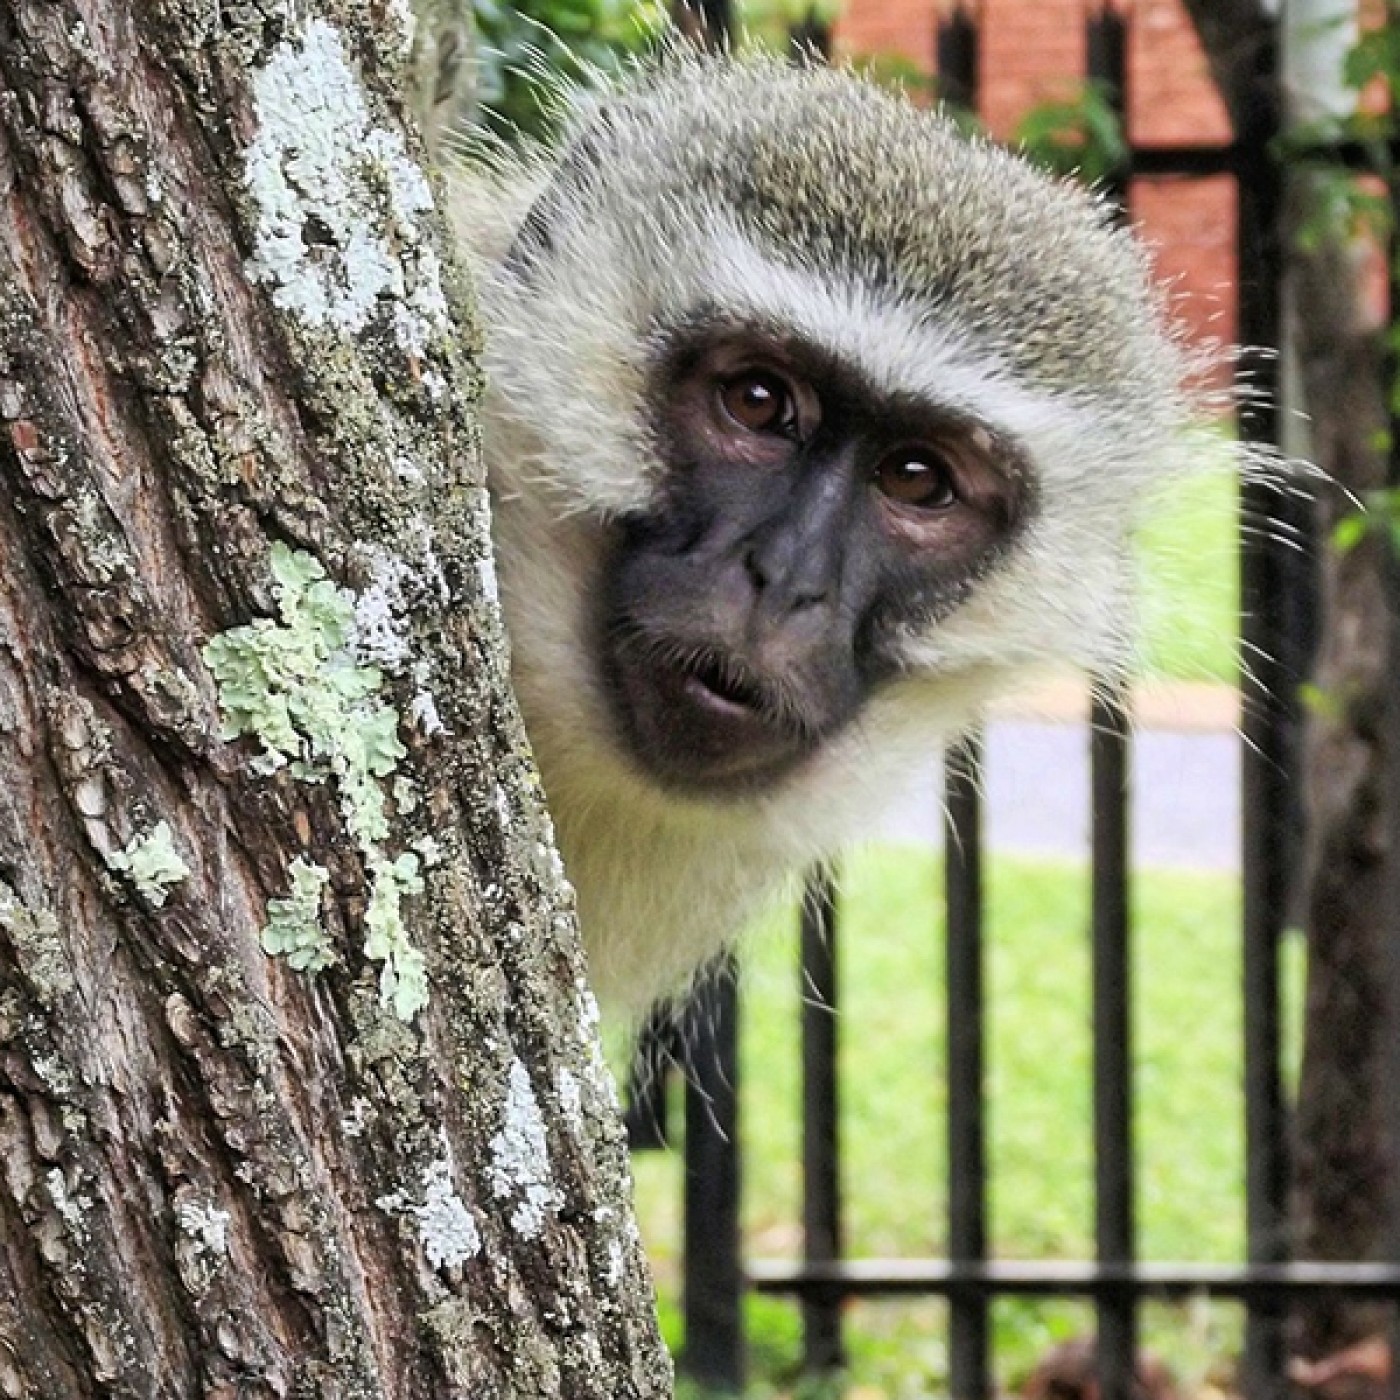 Monkey-ing around - harmless or menace?